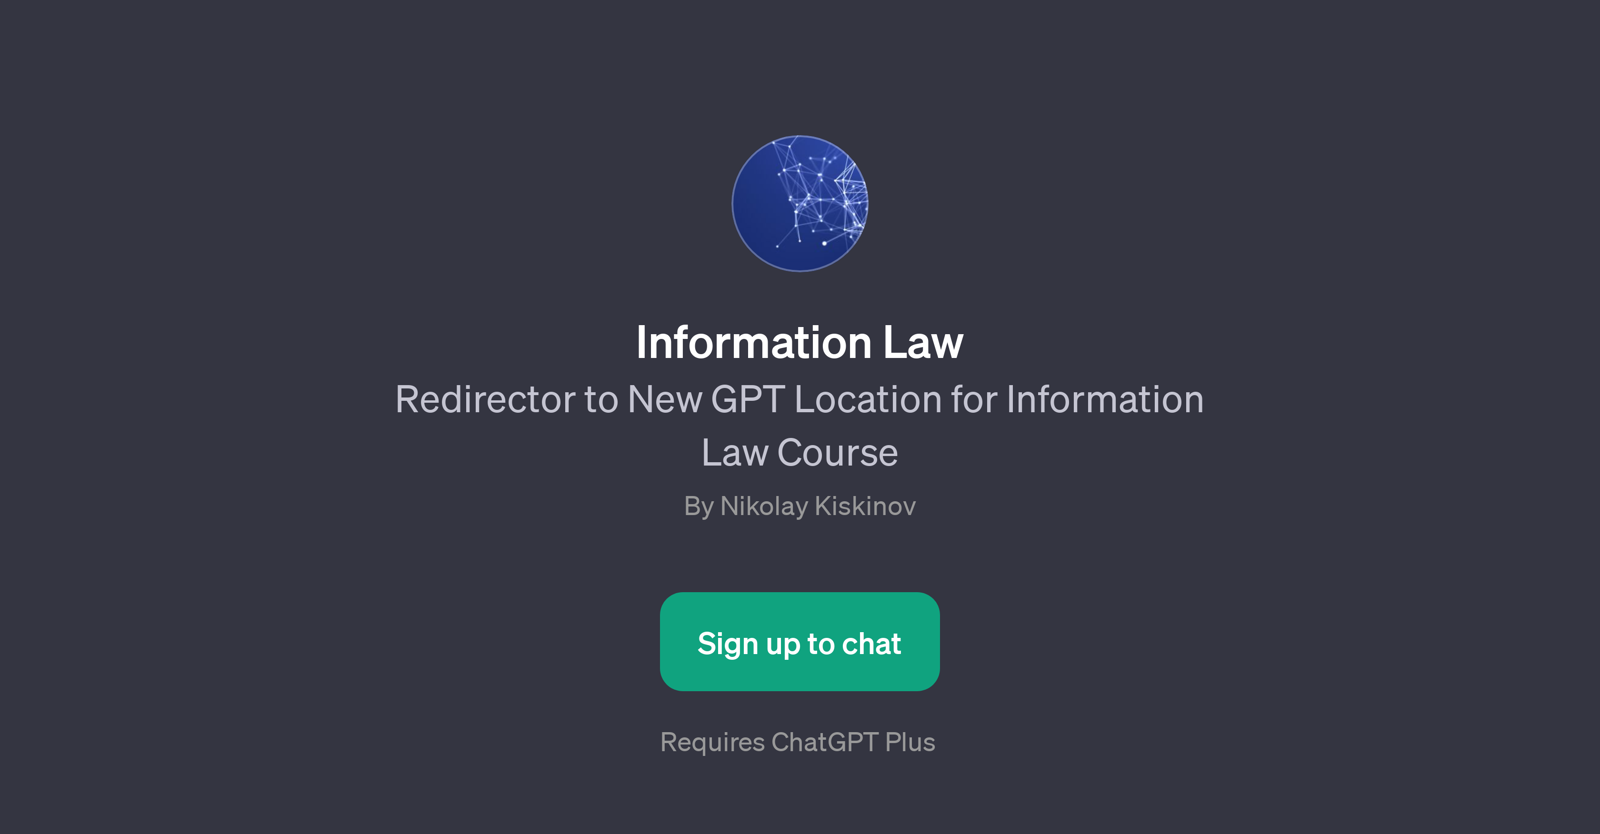 Information Law website